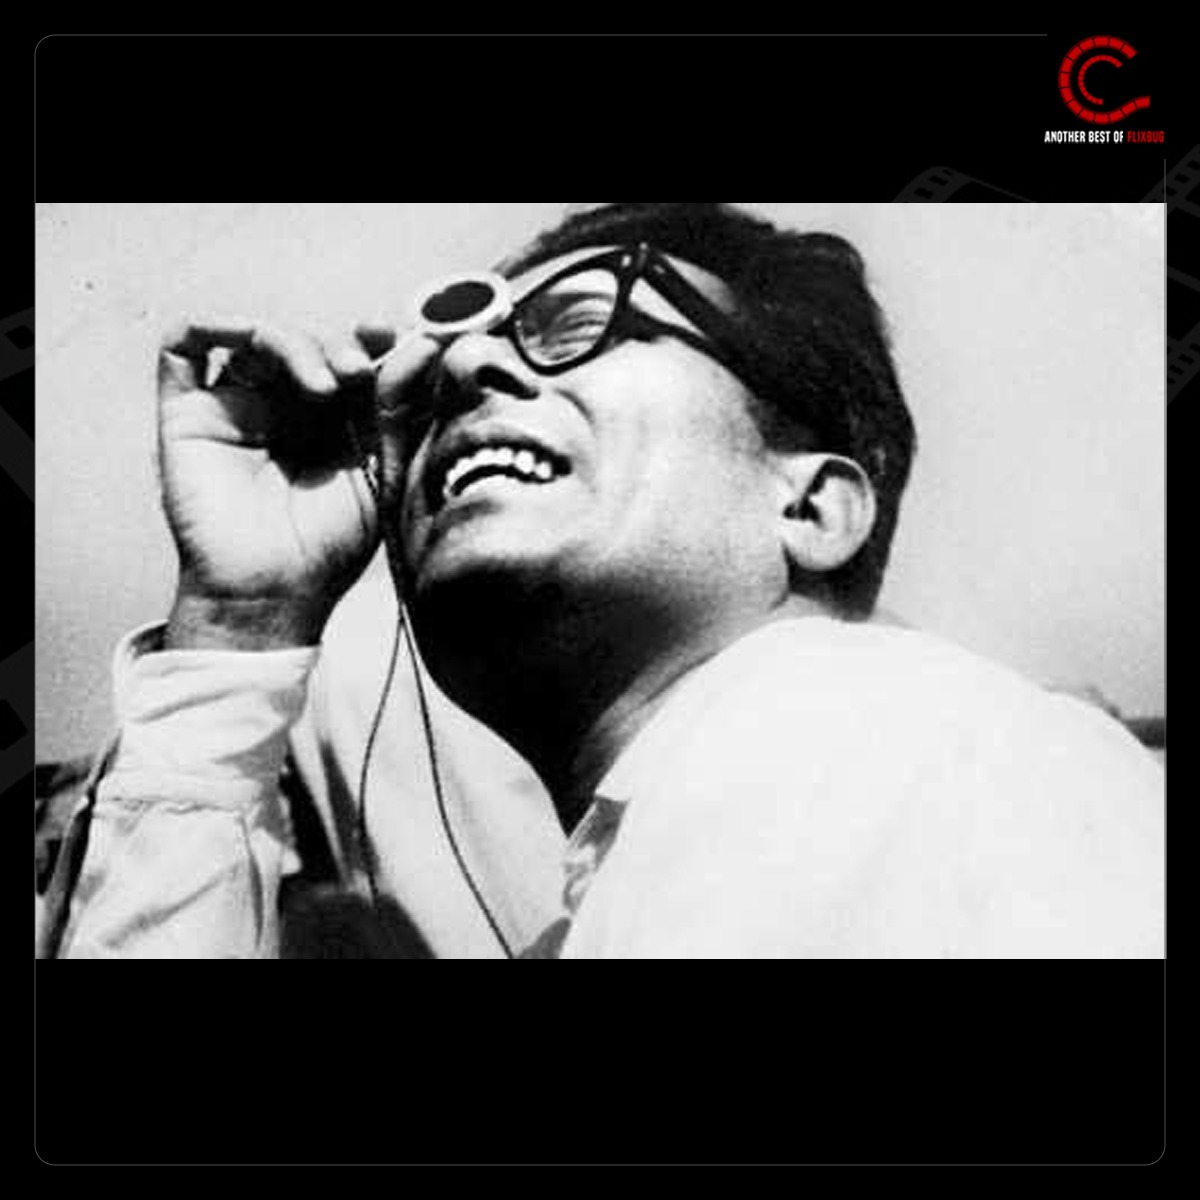 Ciinee Classic A new horizon of Bengali cinema was opened by the incredibly talented film director Ajay Kar. Tributes from Ciinee on his 110th birth anniversary today. #bengalicinema #ajaykar #bengalidirector #legend #goldenera #tollywoodindustry #Ciinee #Ciineeclassic